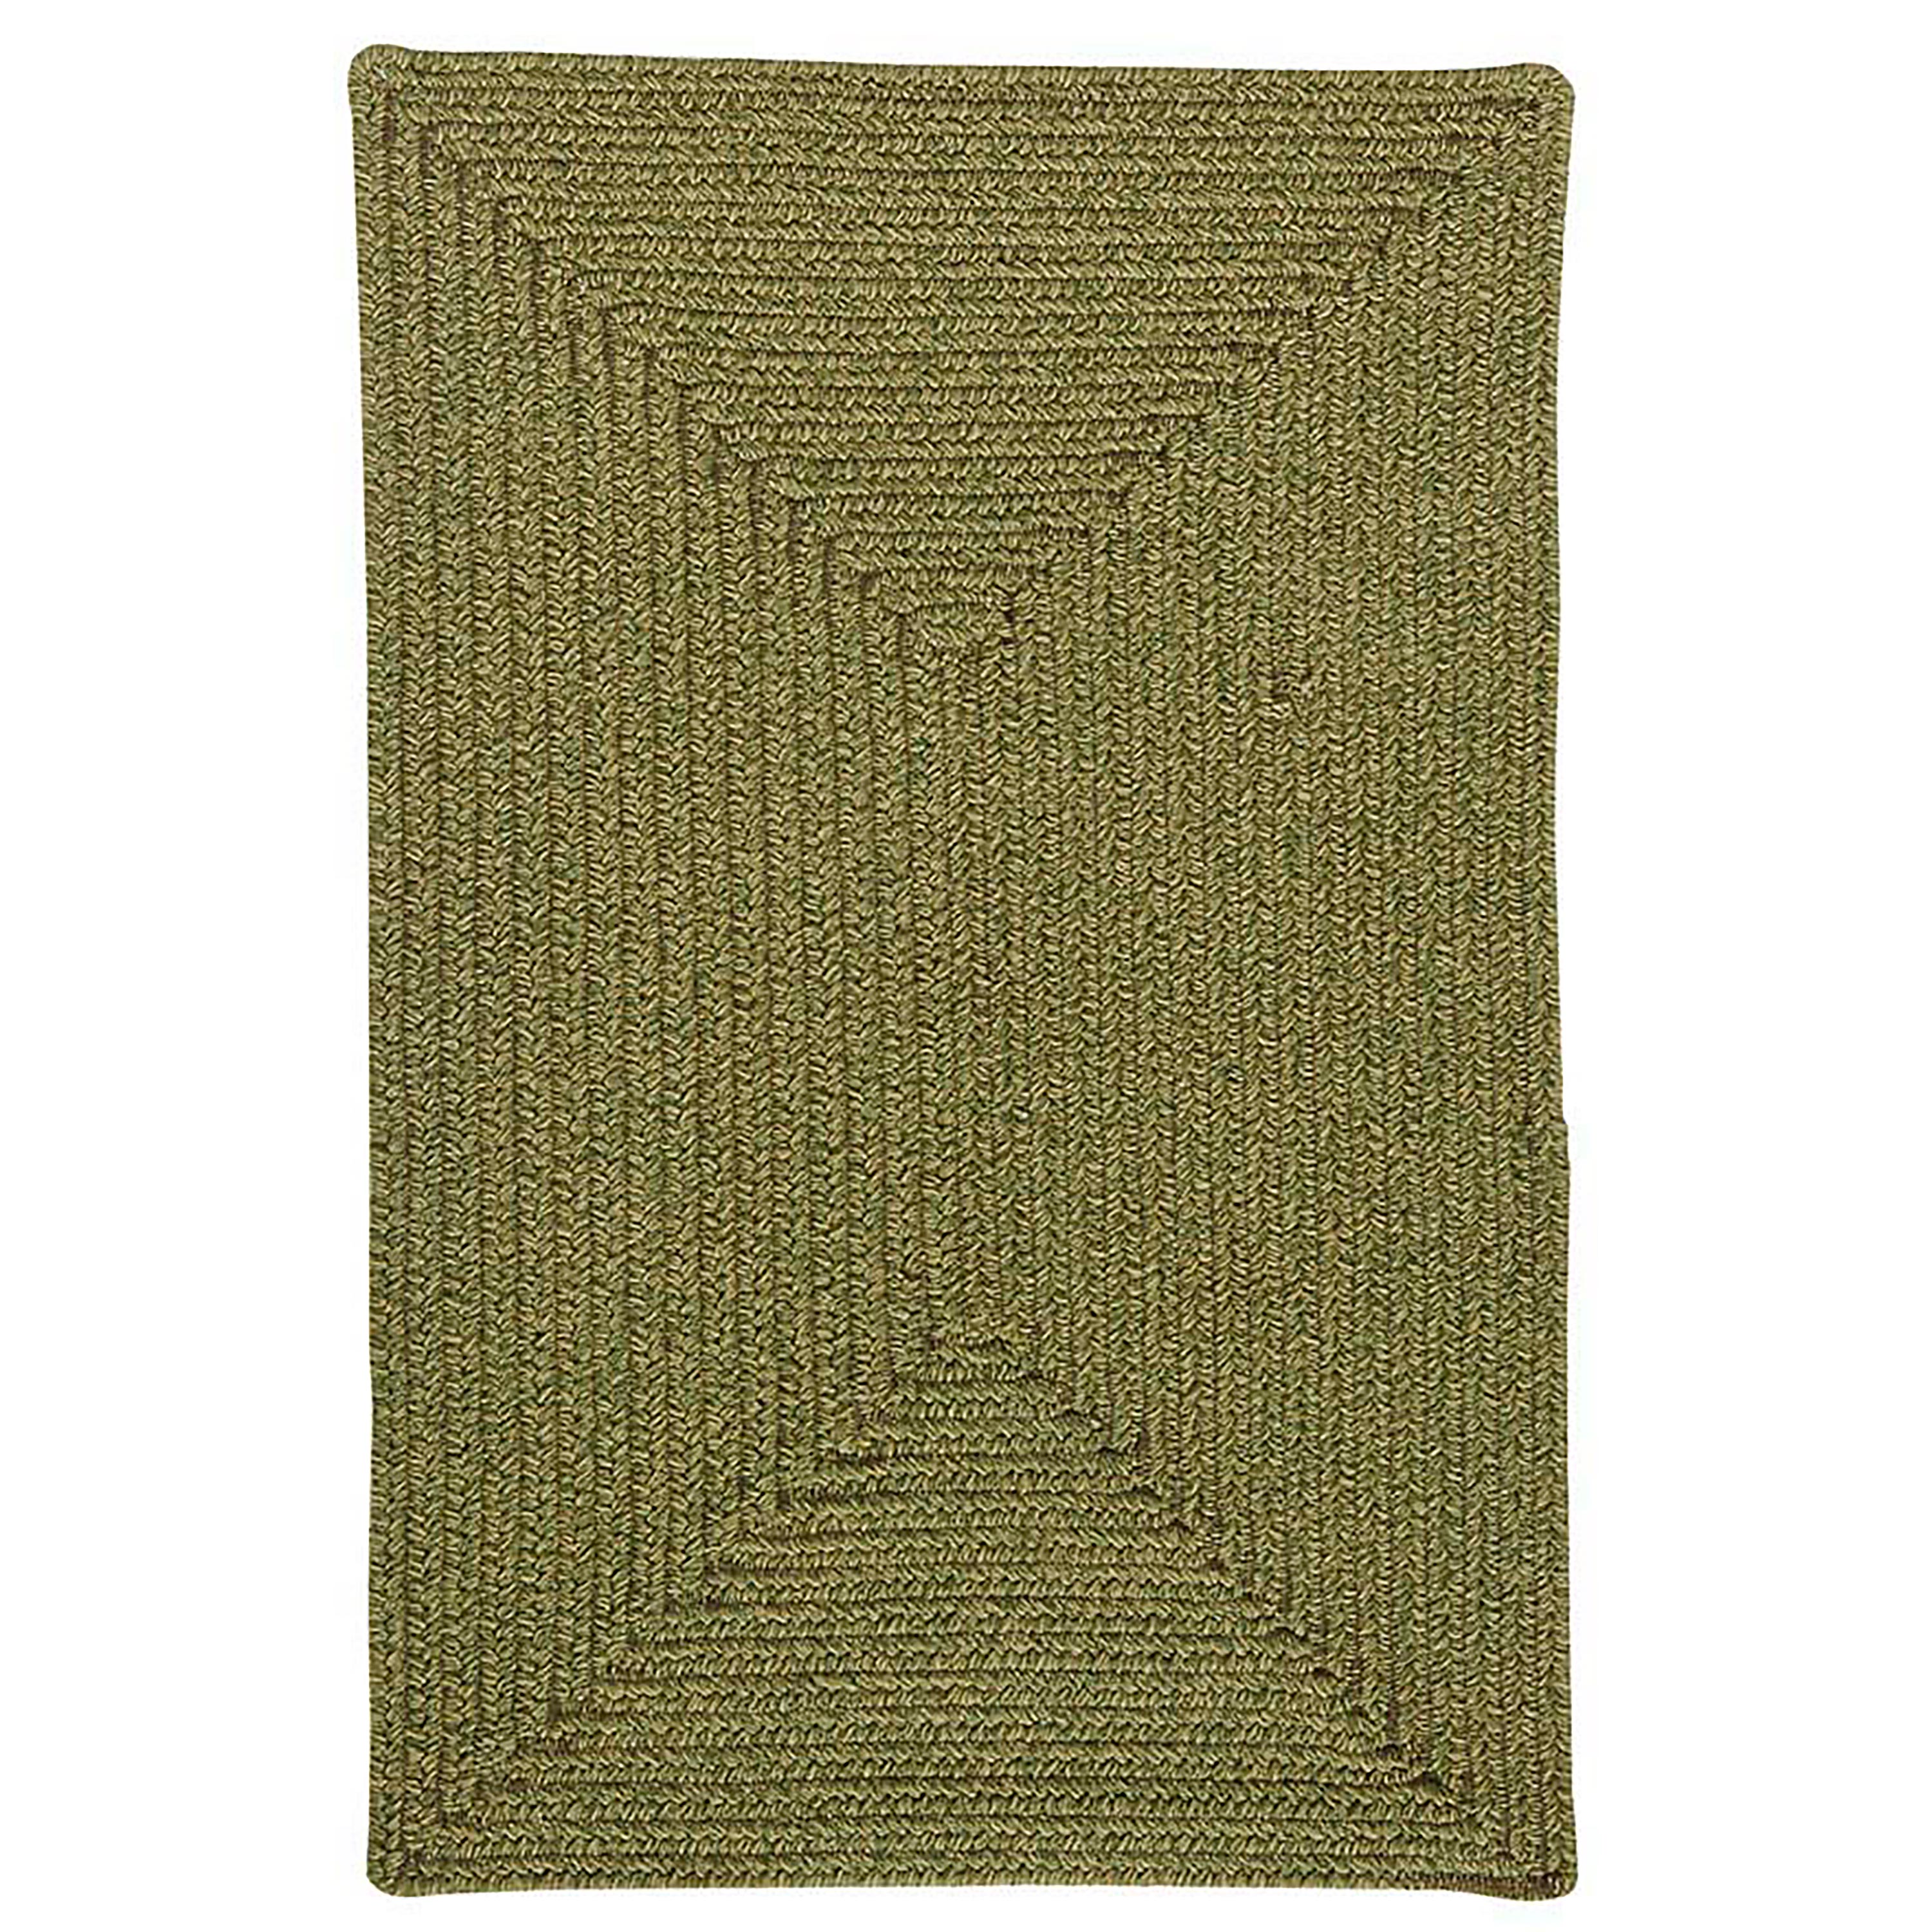 Image of 7' x 9' Bear Creek Rectangular Braided Wool & Nylon Rug, in Olive